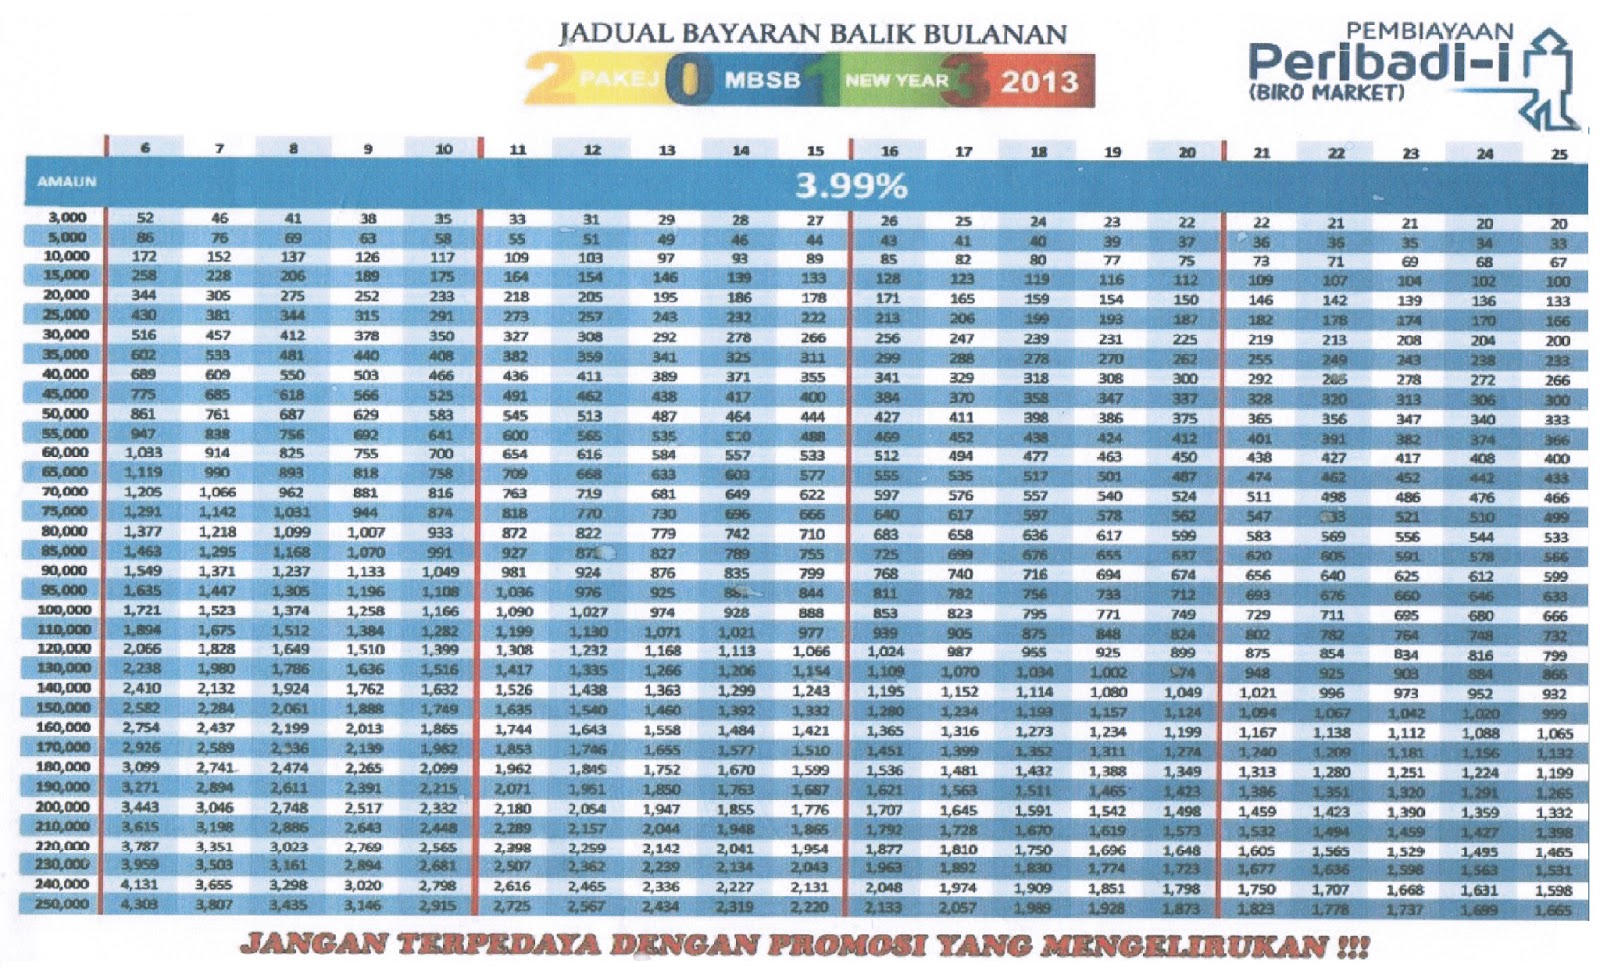 JADUAL PINJAMAN PERIBADI BANK RAKYAT 2012 PDF